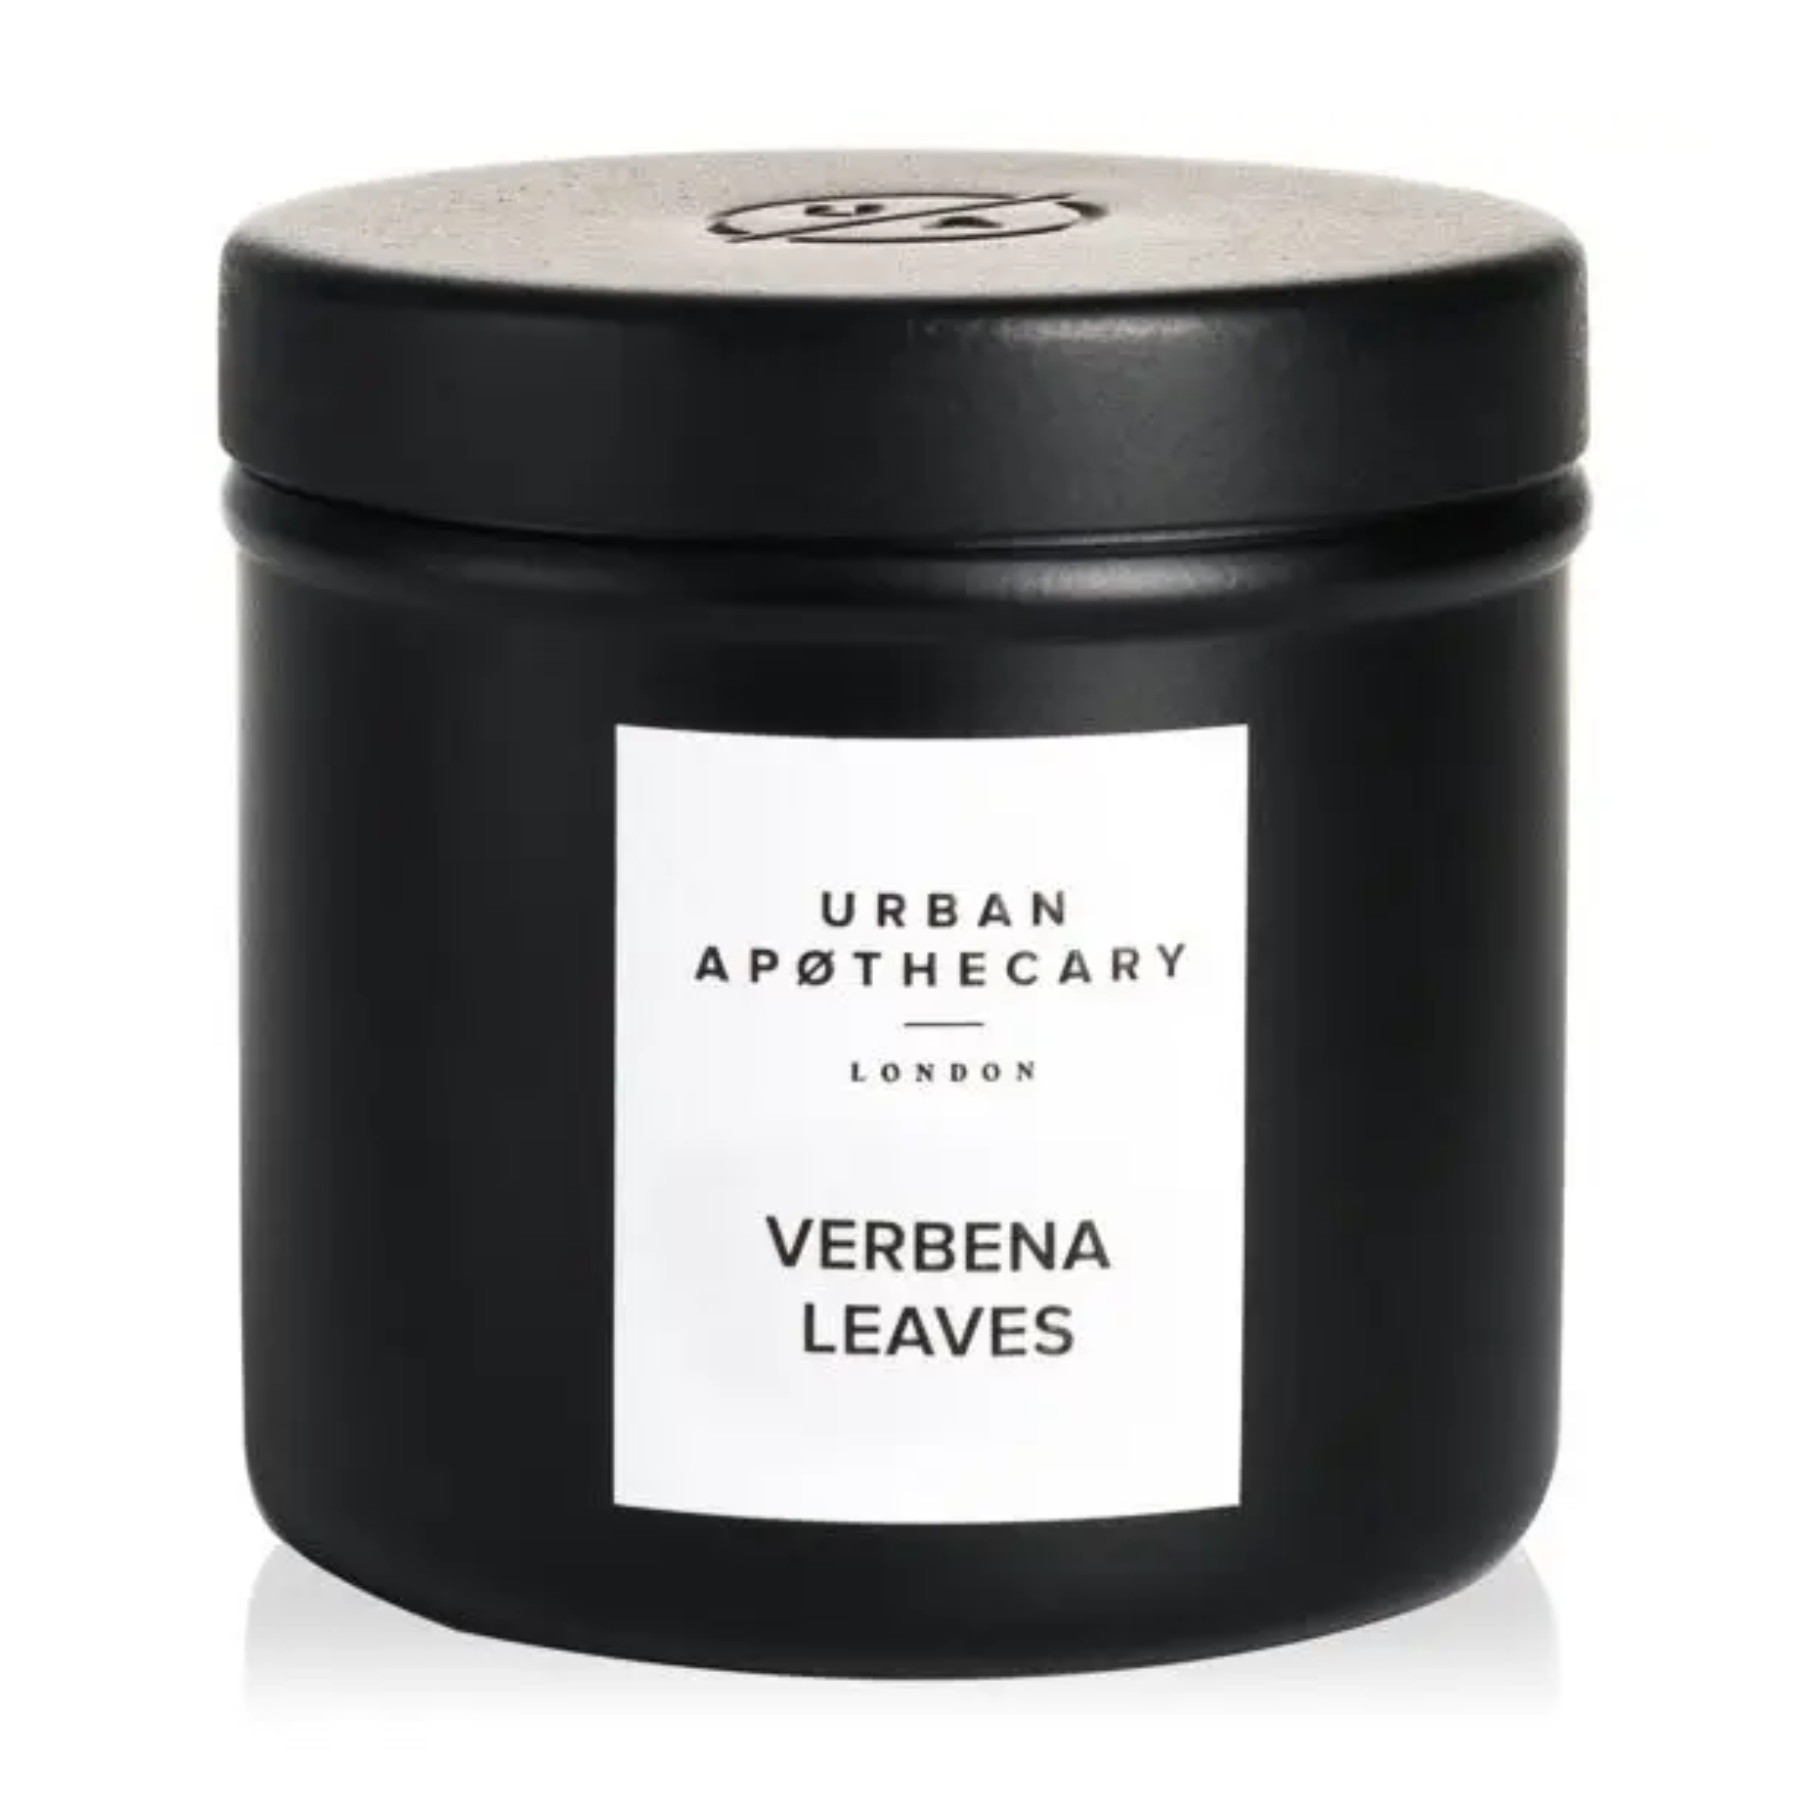 Ароматическая свеча с цитрусовым ароматом Urban apothecary Verbena Leaves, 175г